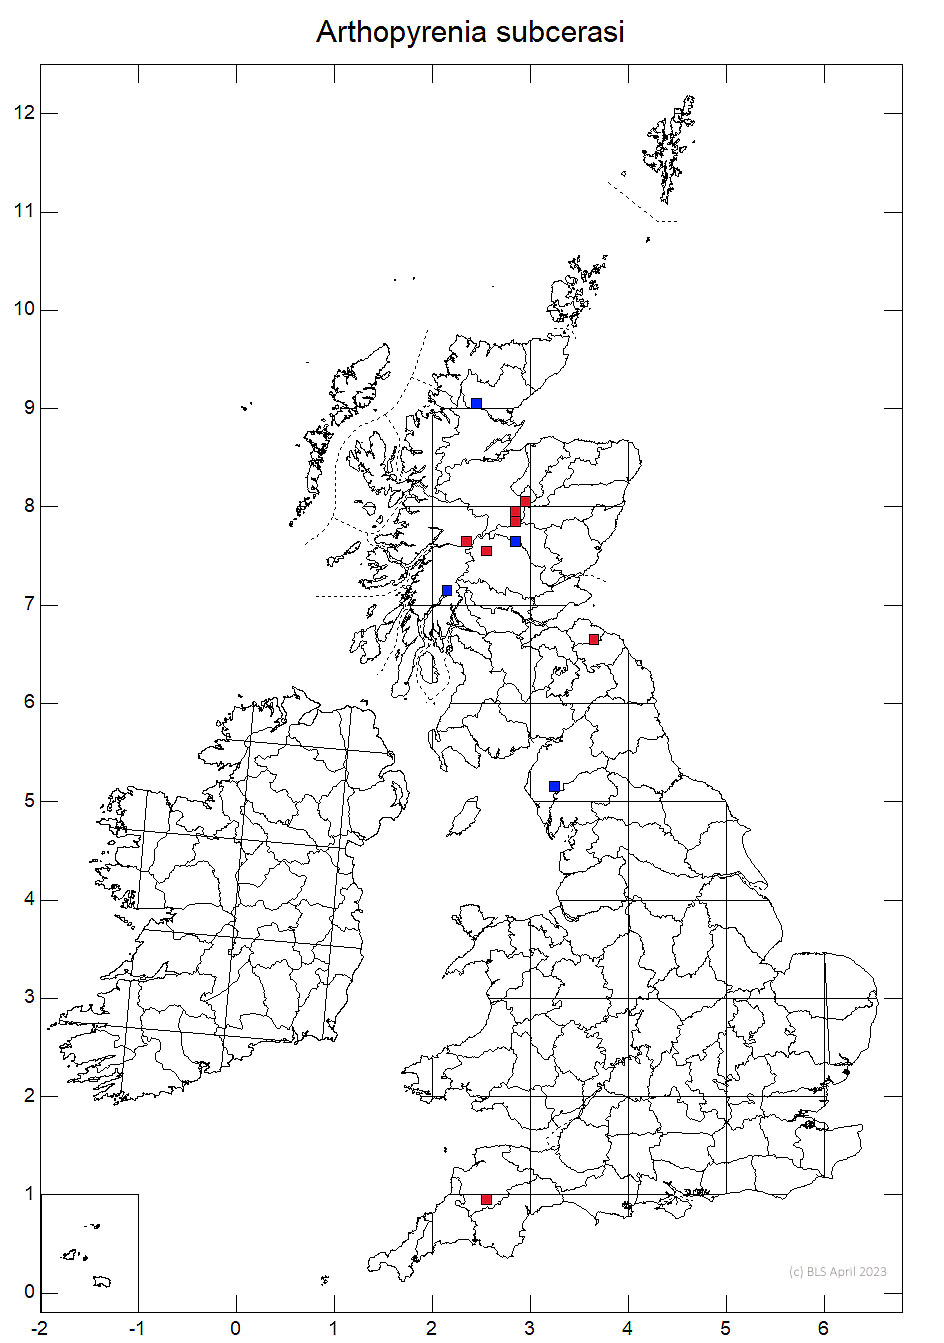 Arthopyrenia subcerasi 10km sq distribution map